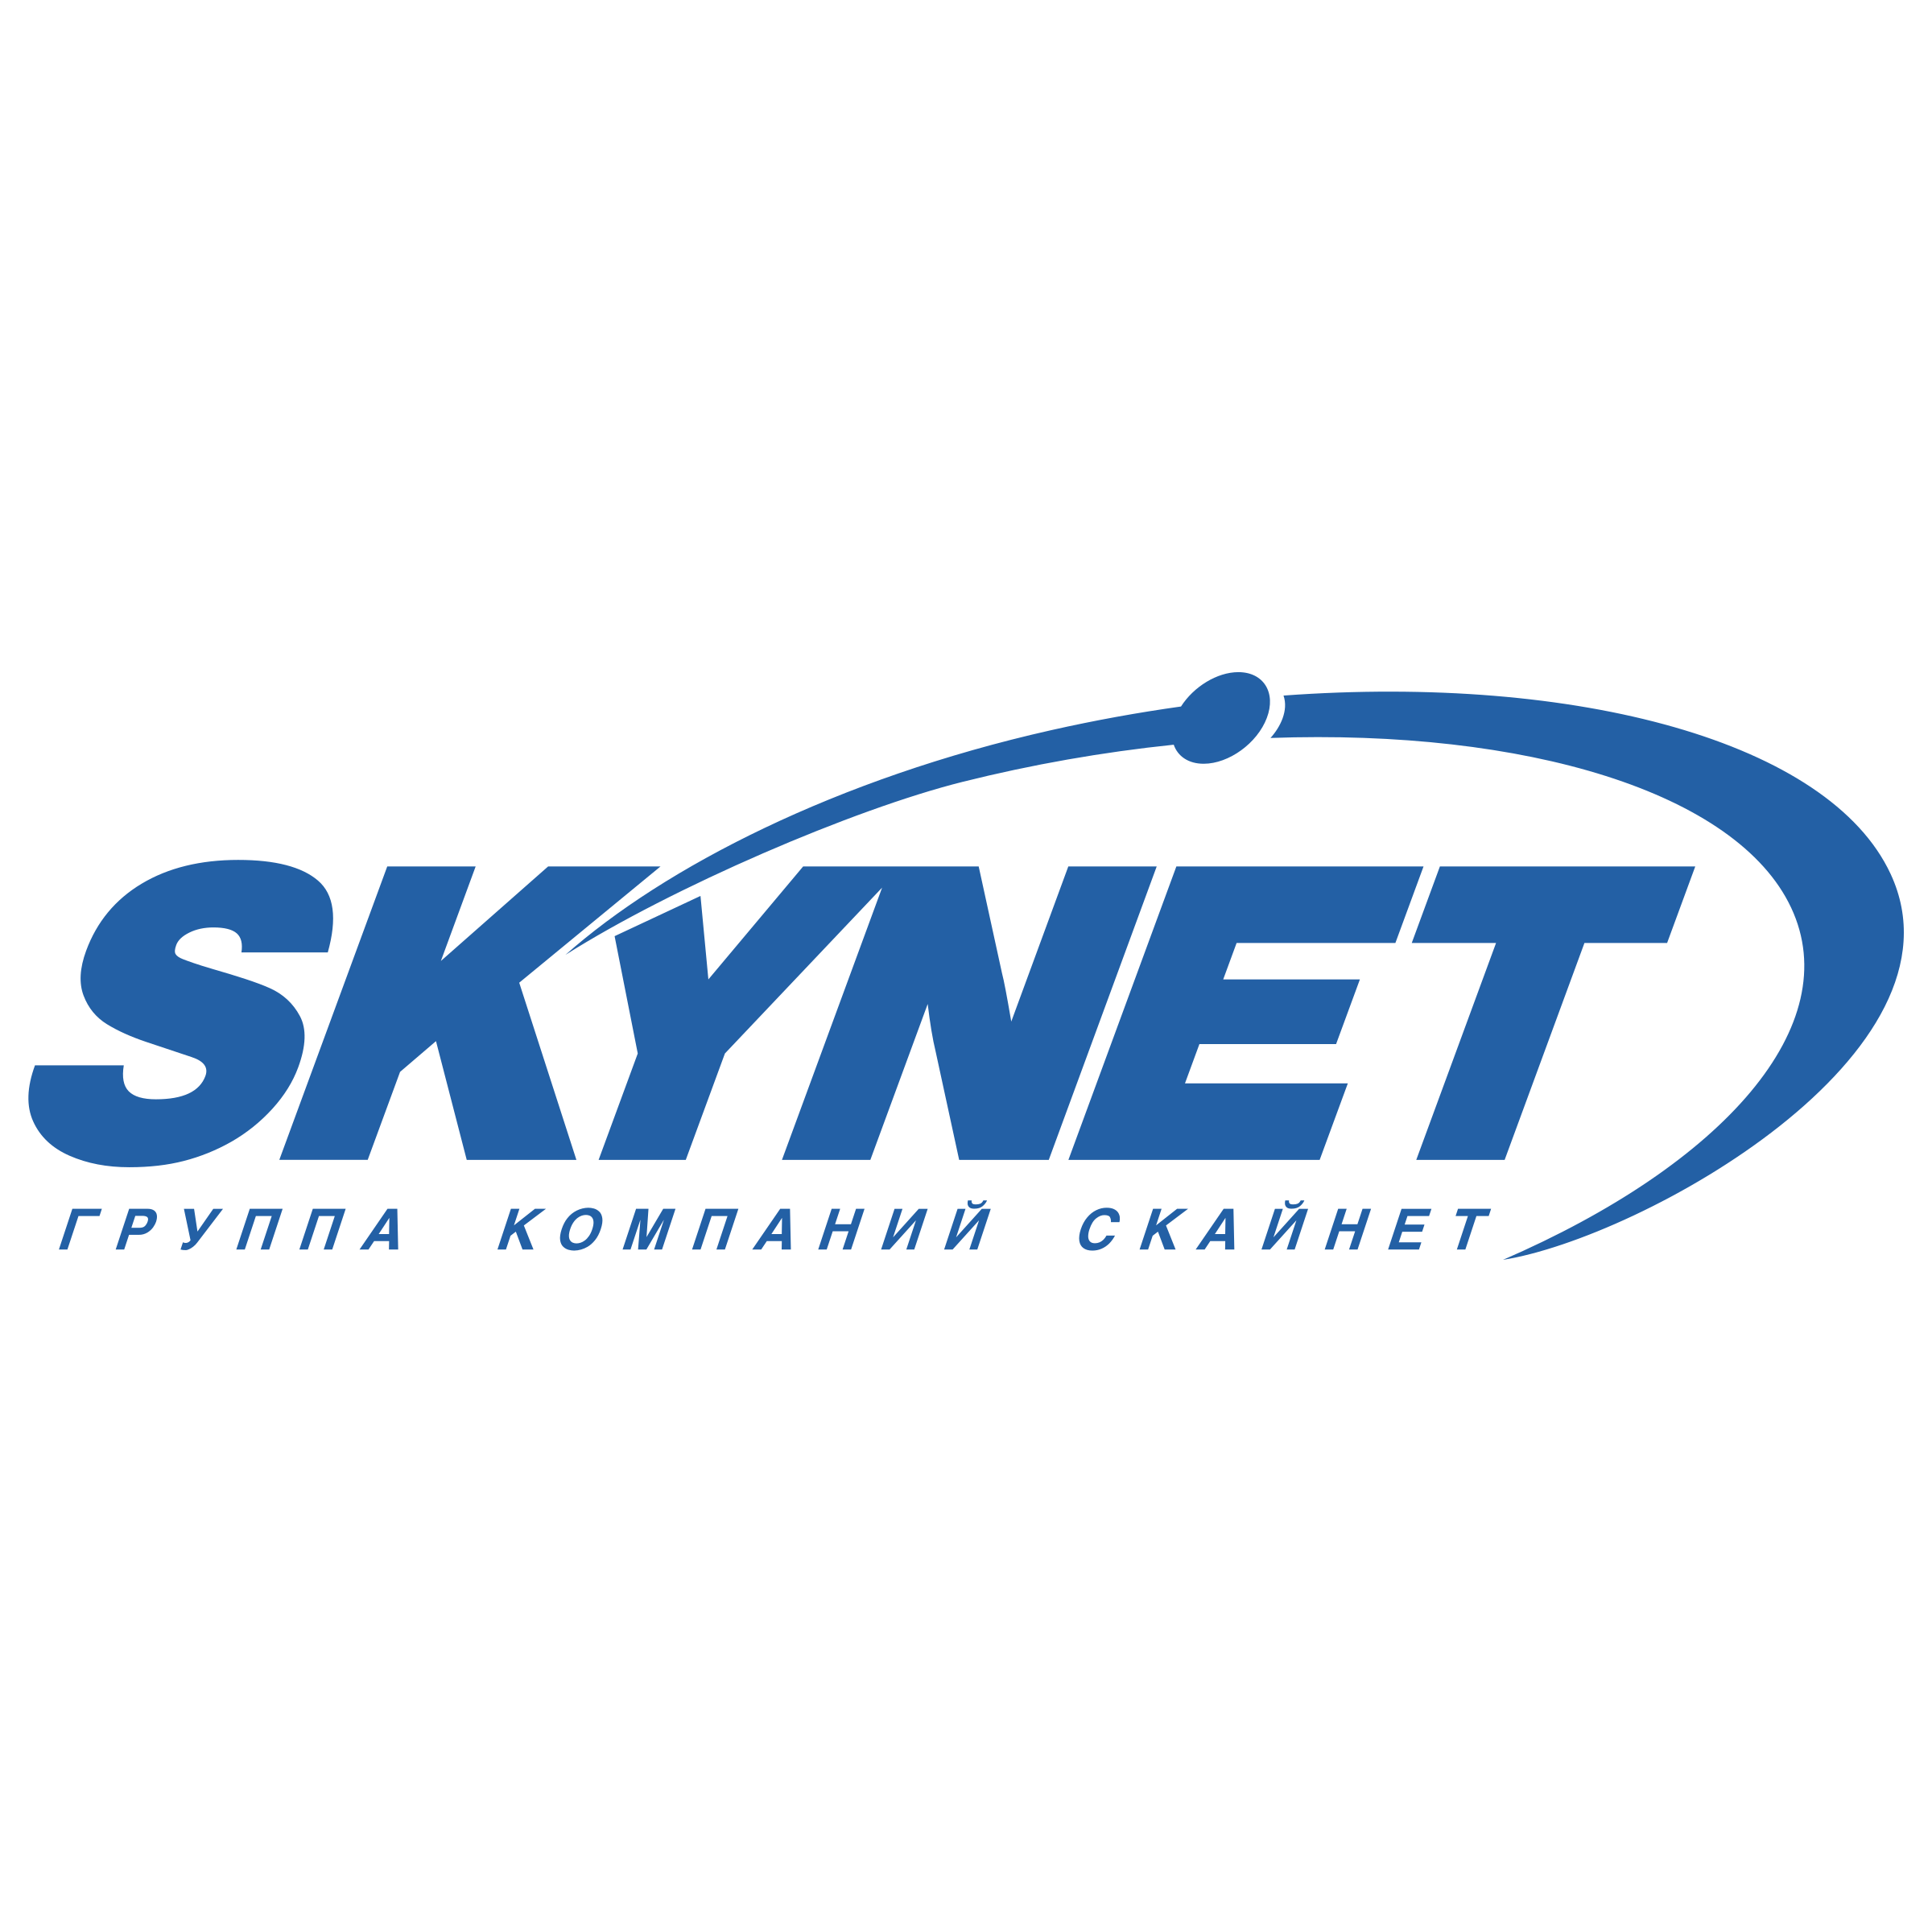 Skynet Logo - Skynet Logo PNG Transparent & SVG Vector - Freebie Supply